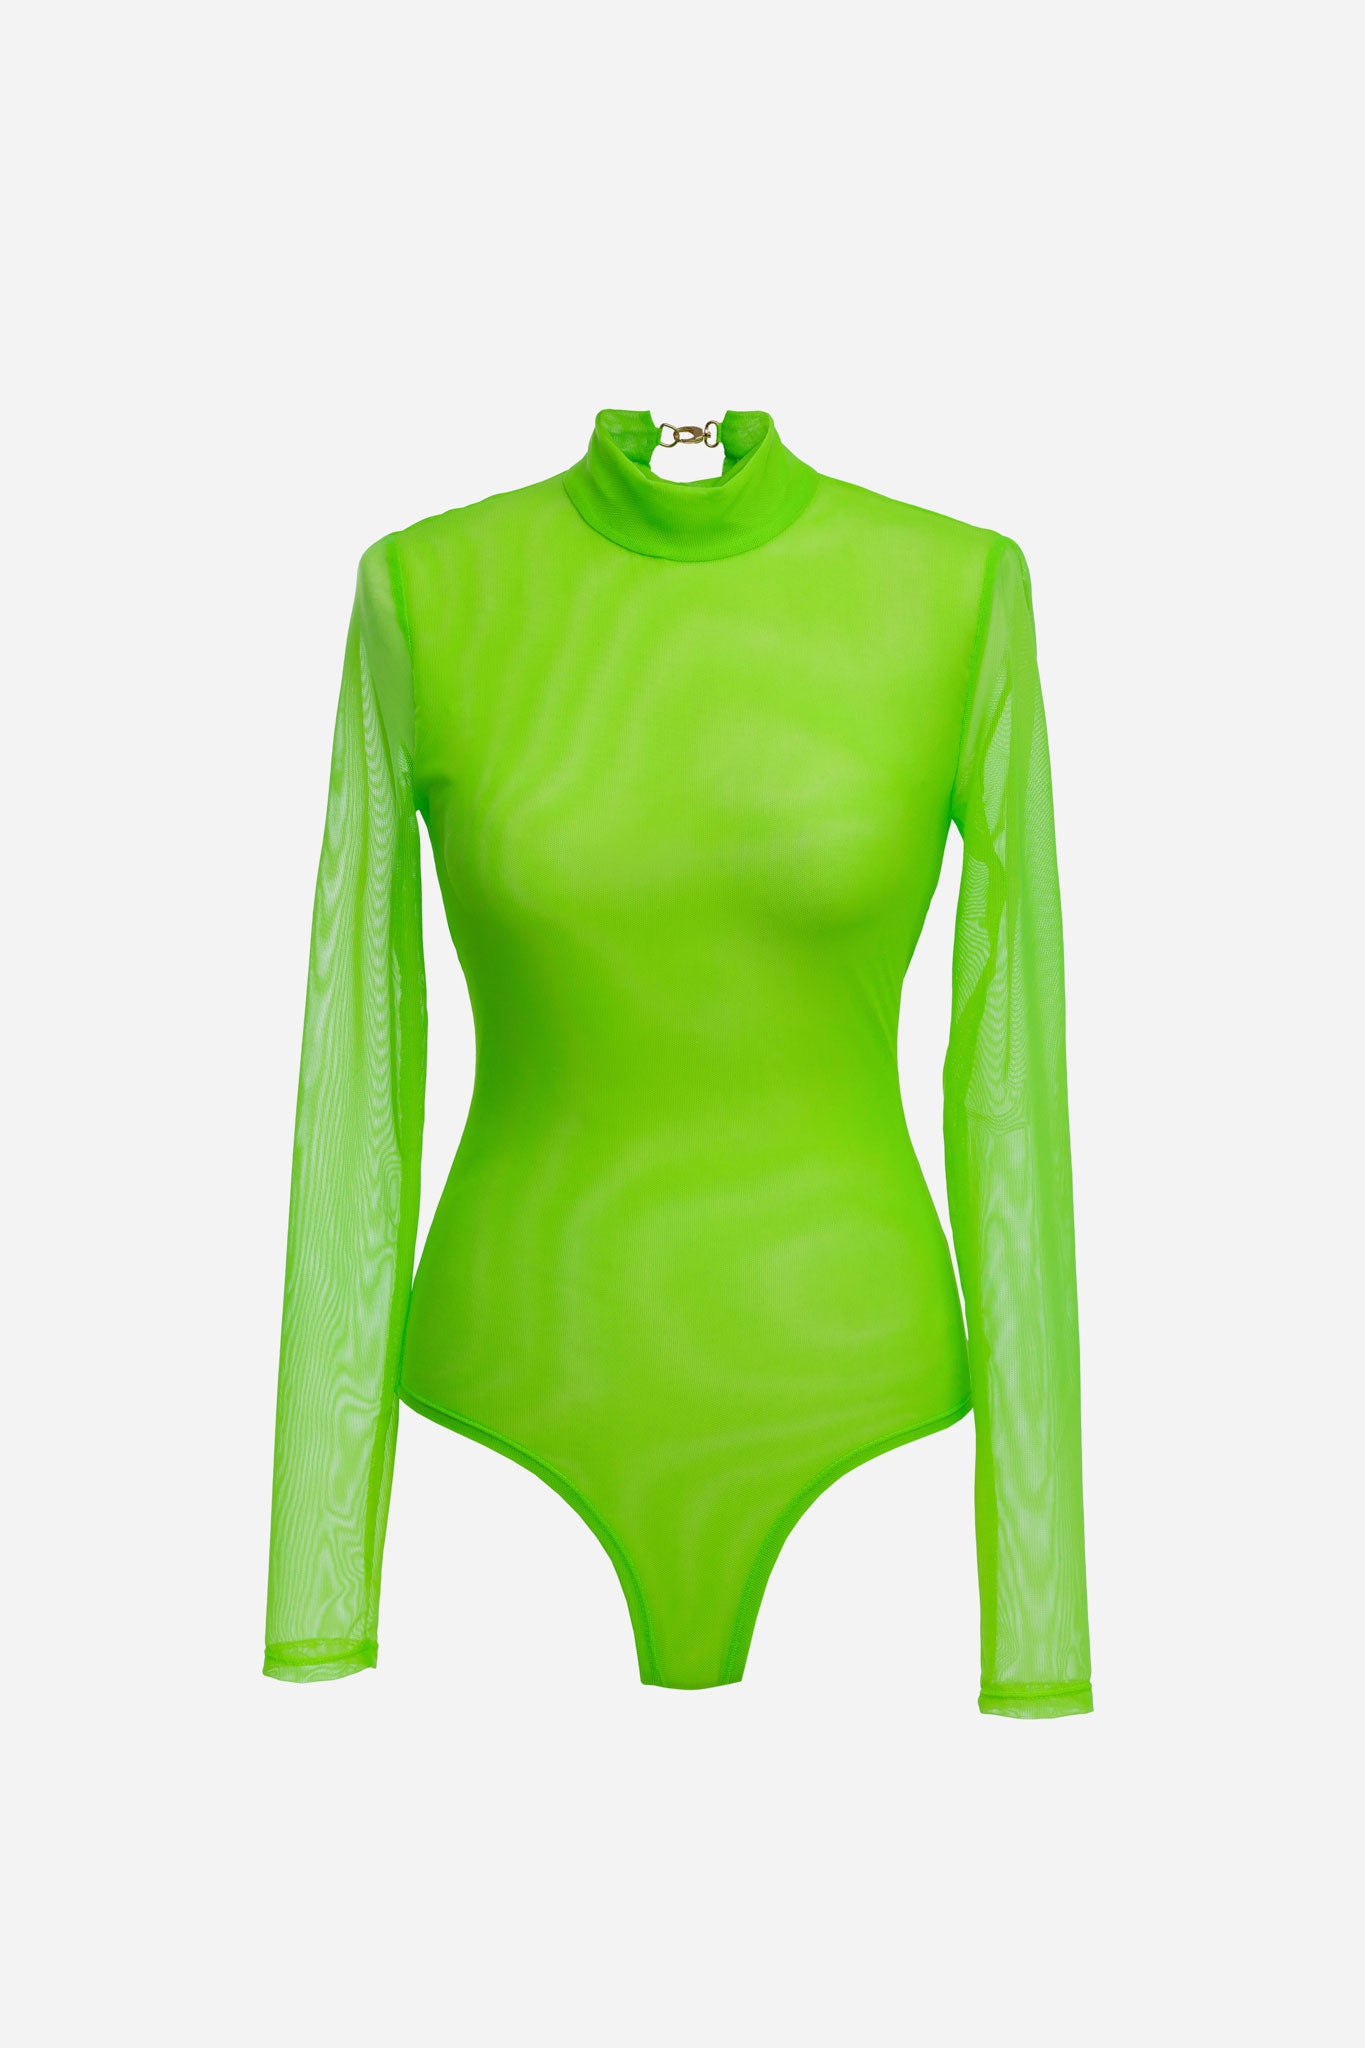 Green Fluo Bodysuit